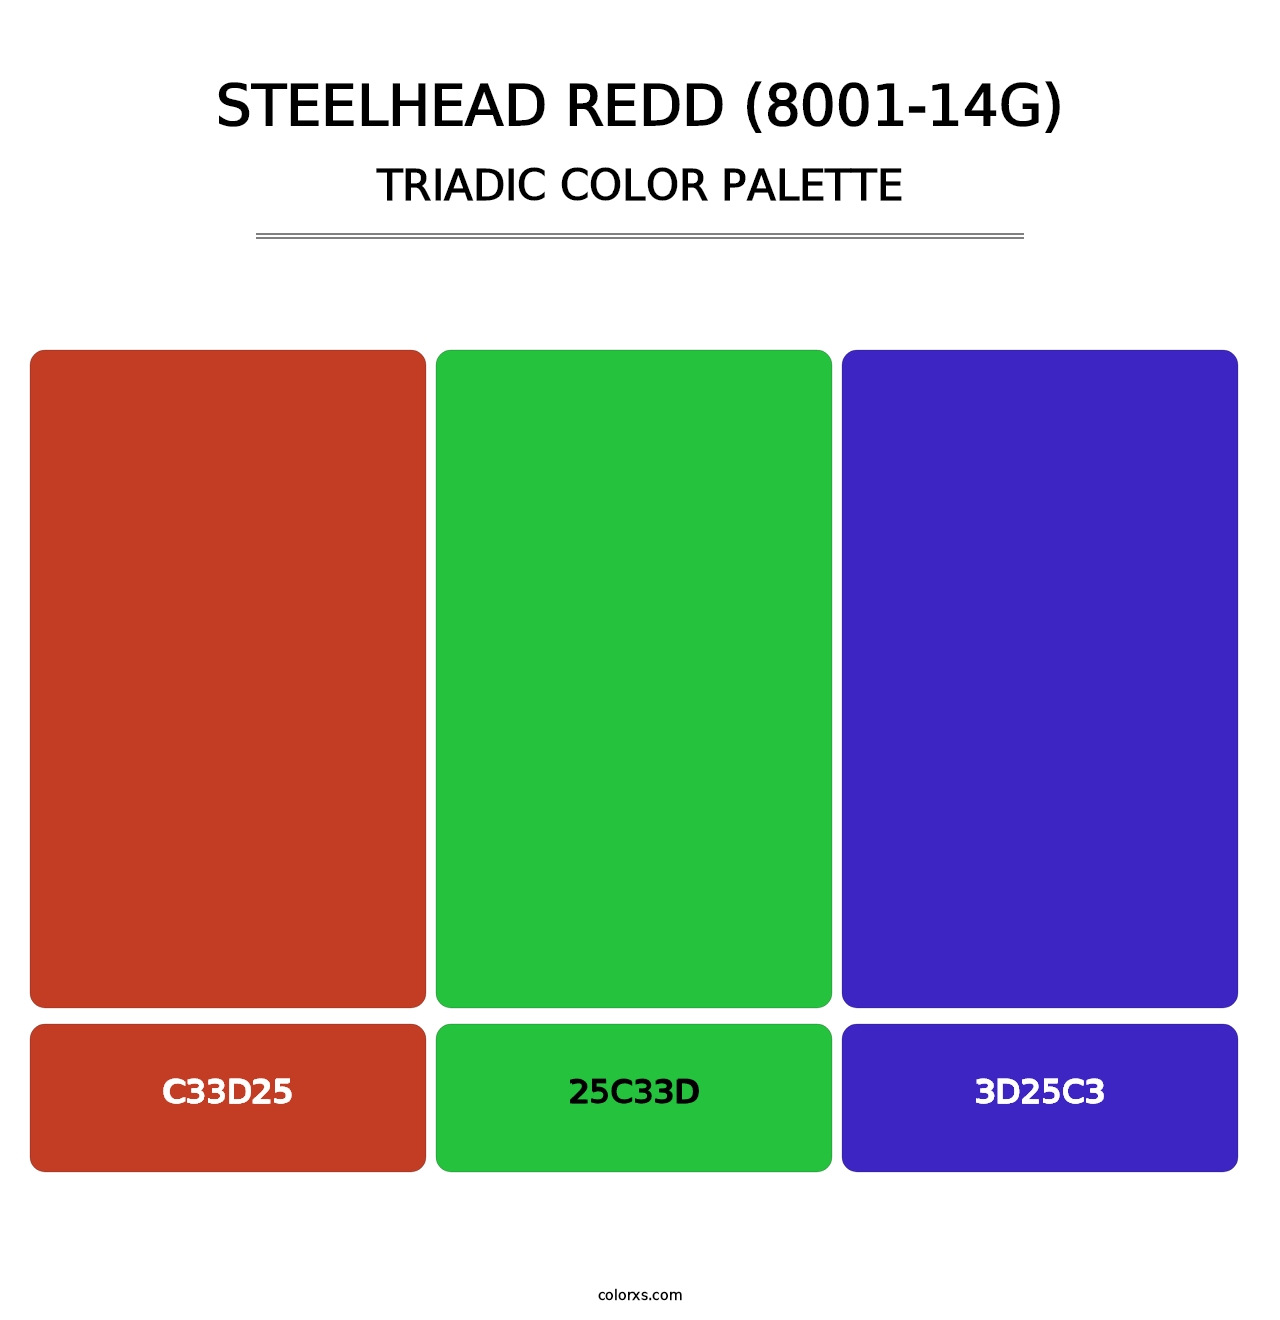 Steelhead Redd (8001-14G) - Triadic Color Palette